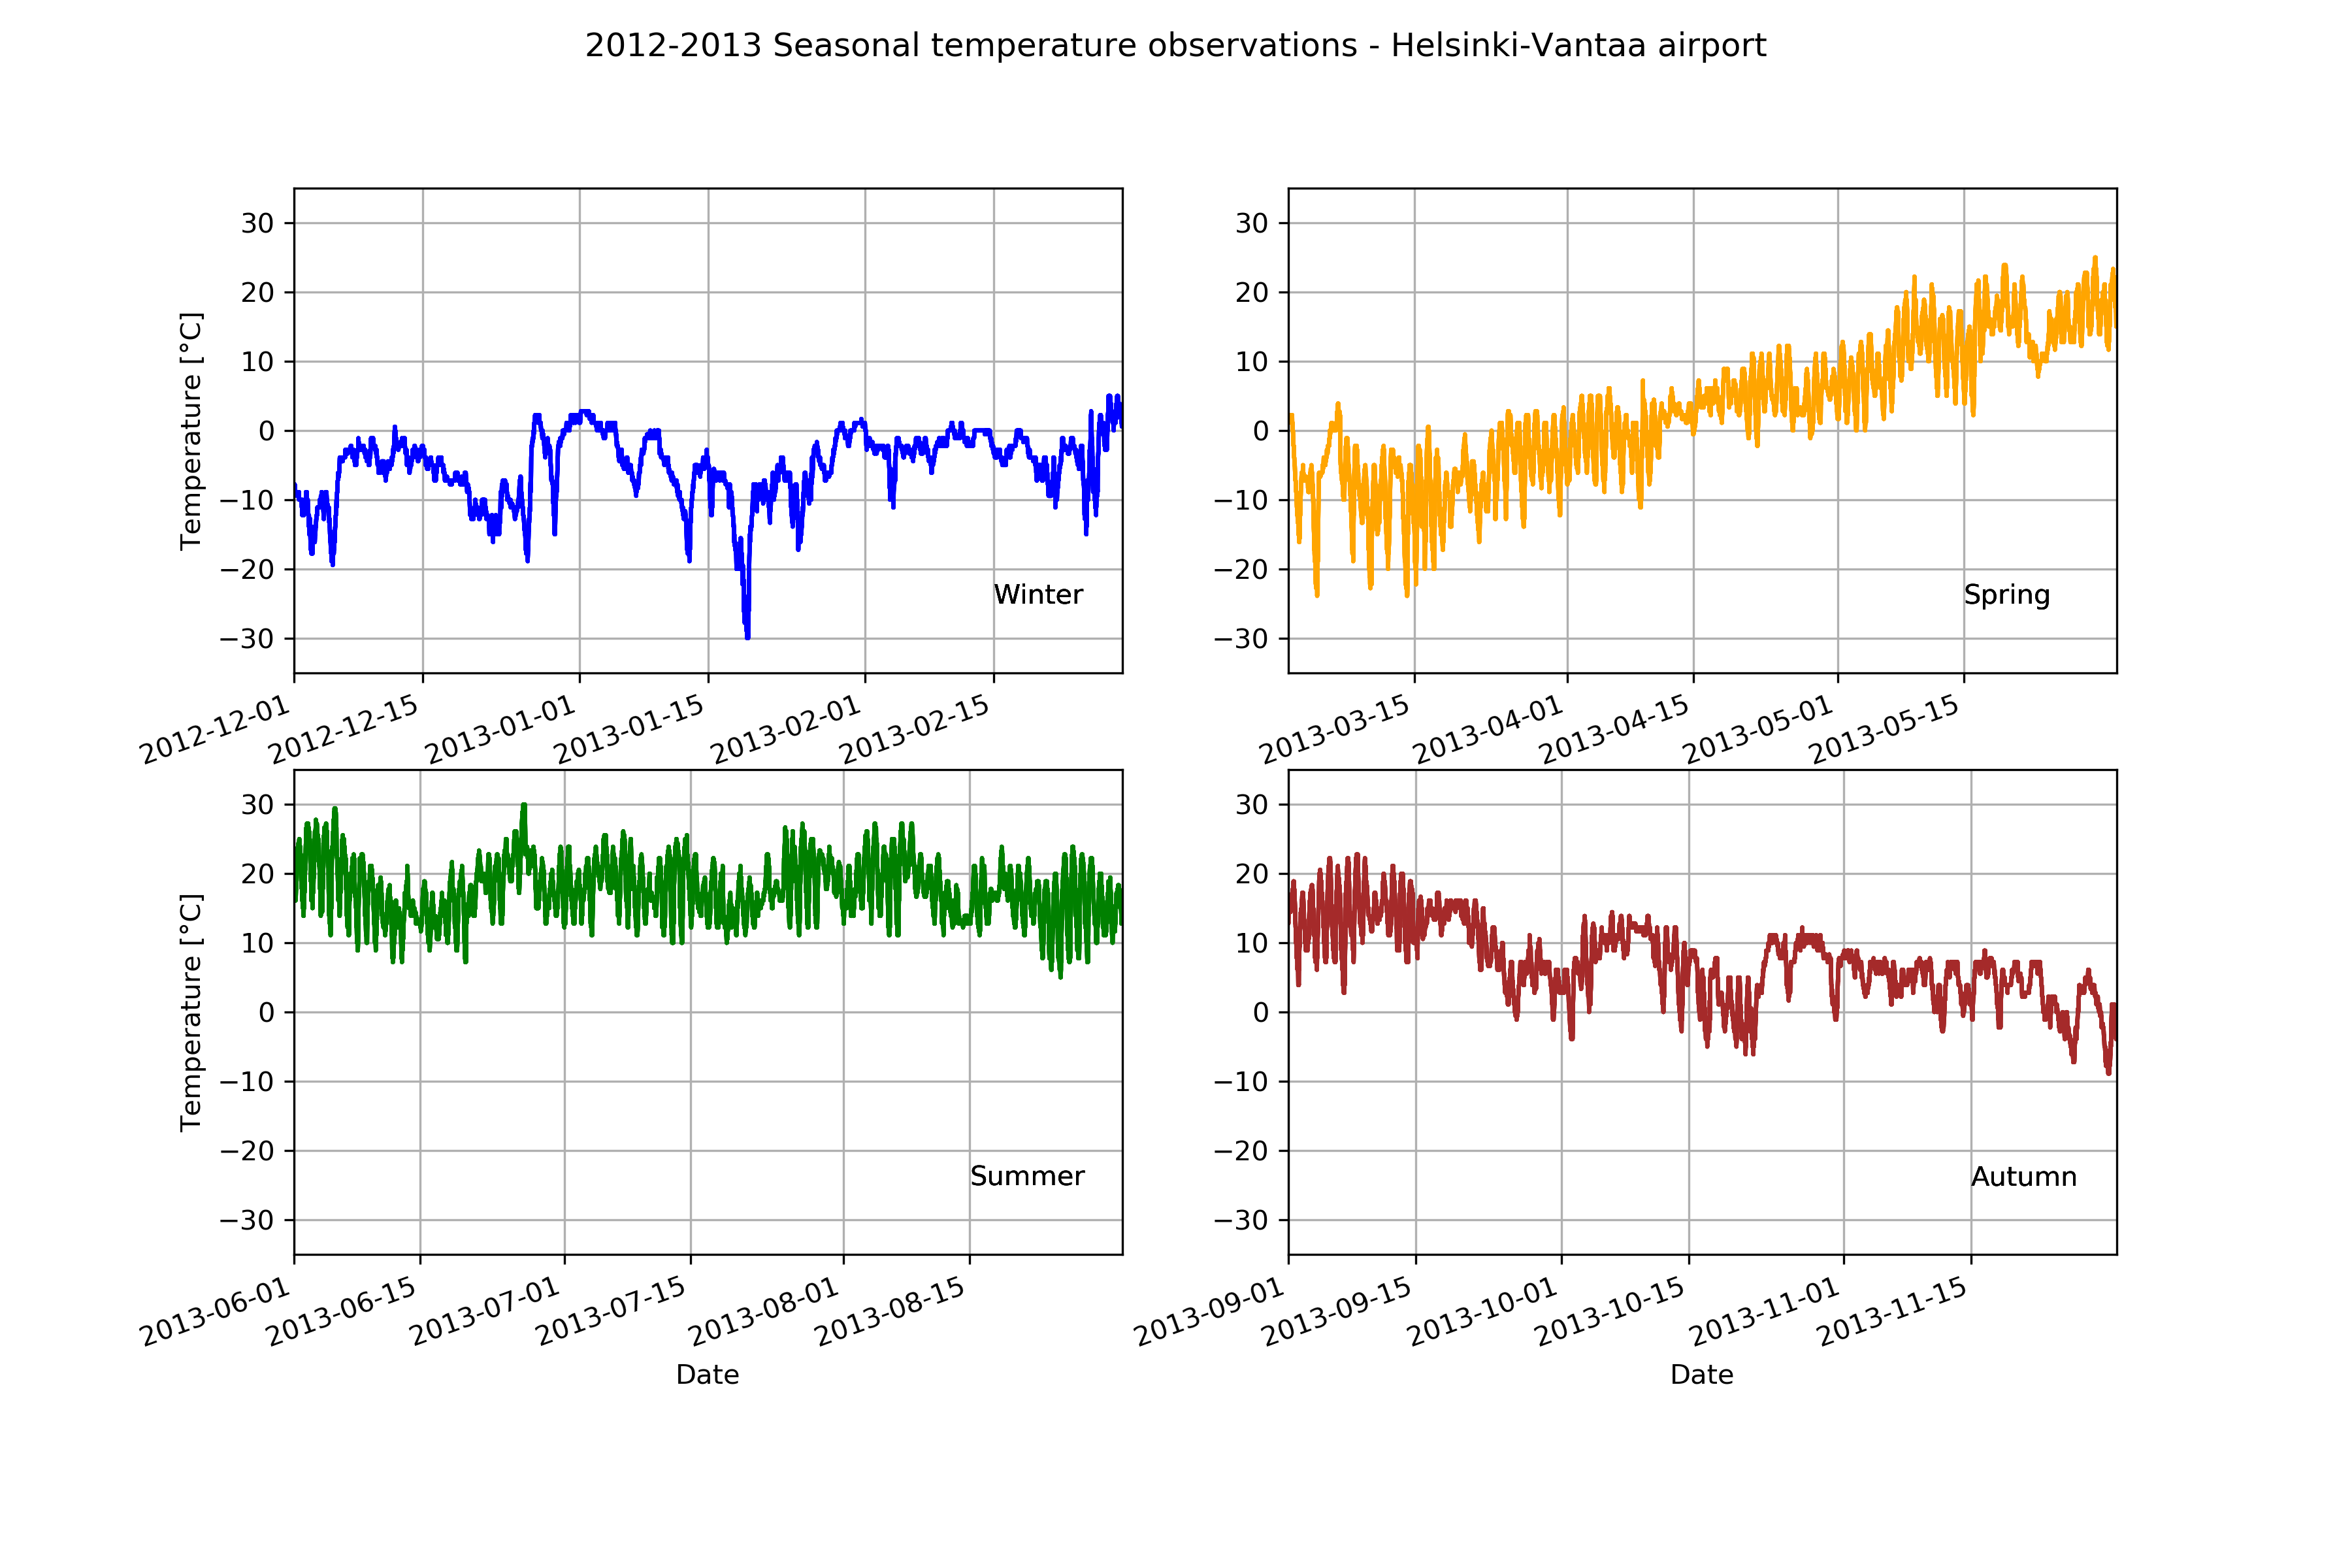 Figure 4.11. An example of seasonal temperatures for 2012-2013 using pandas and Matplotlib.